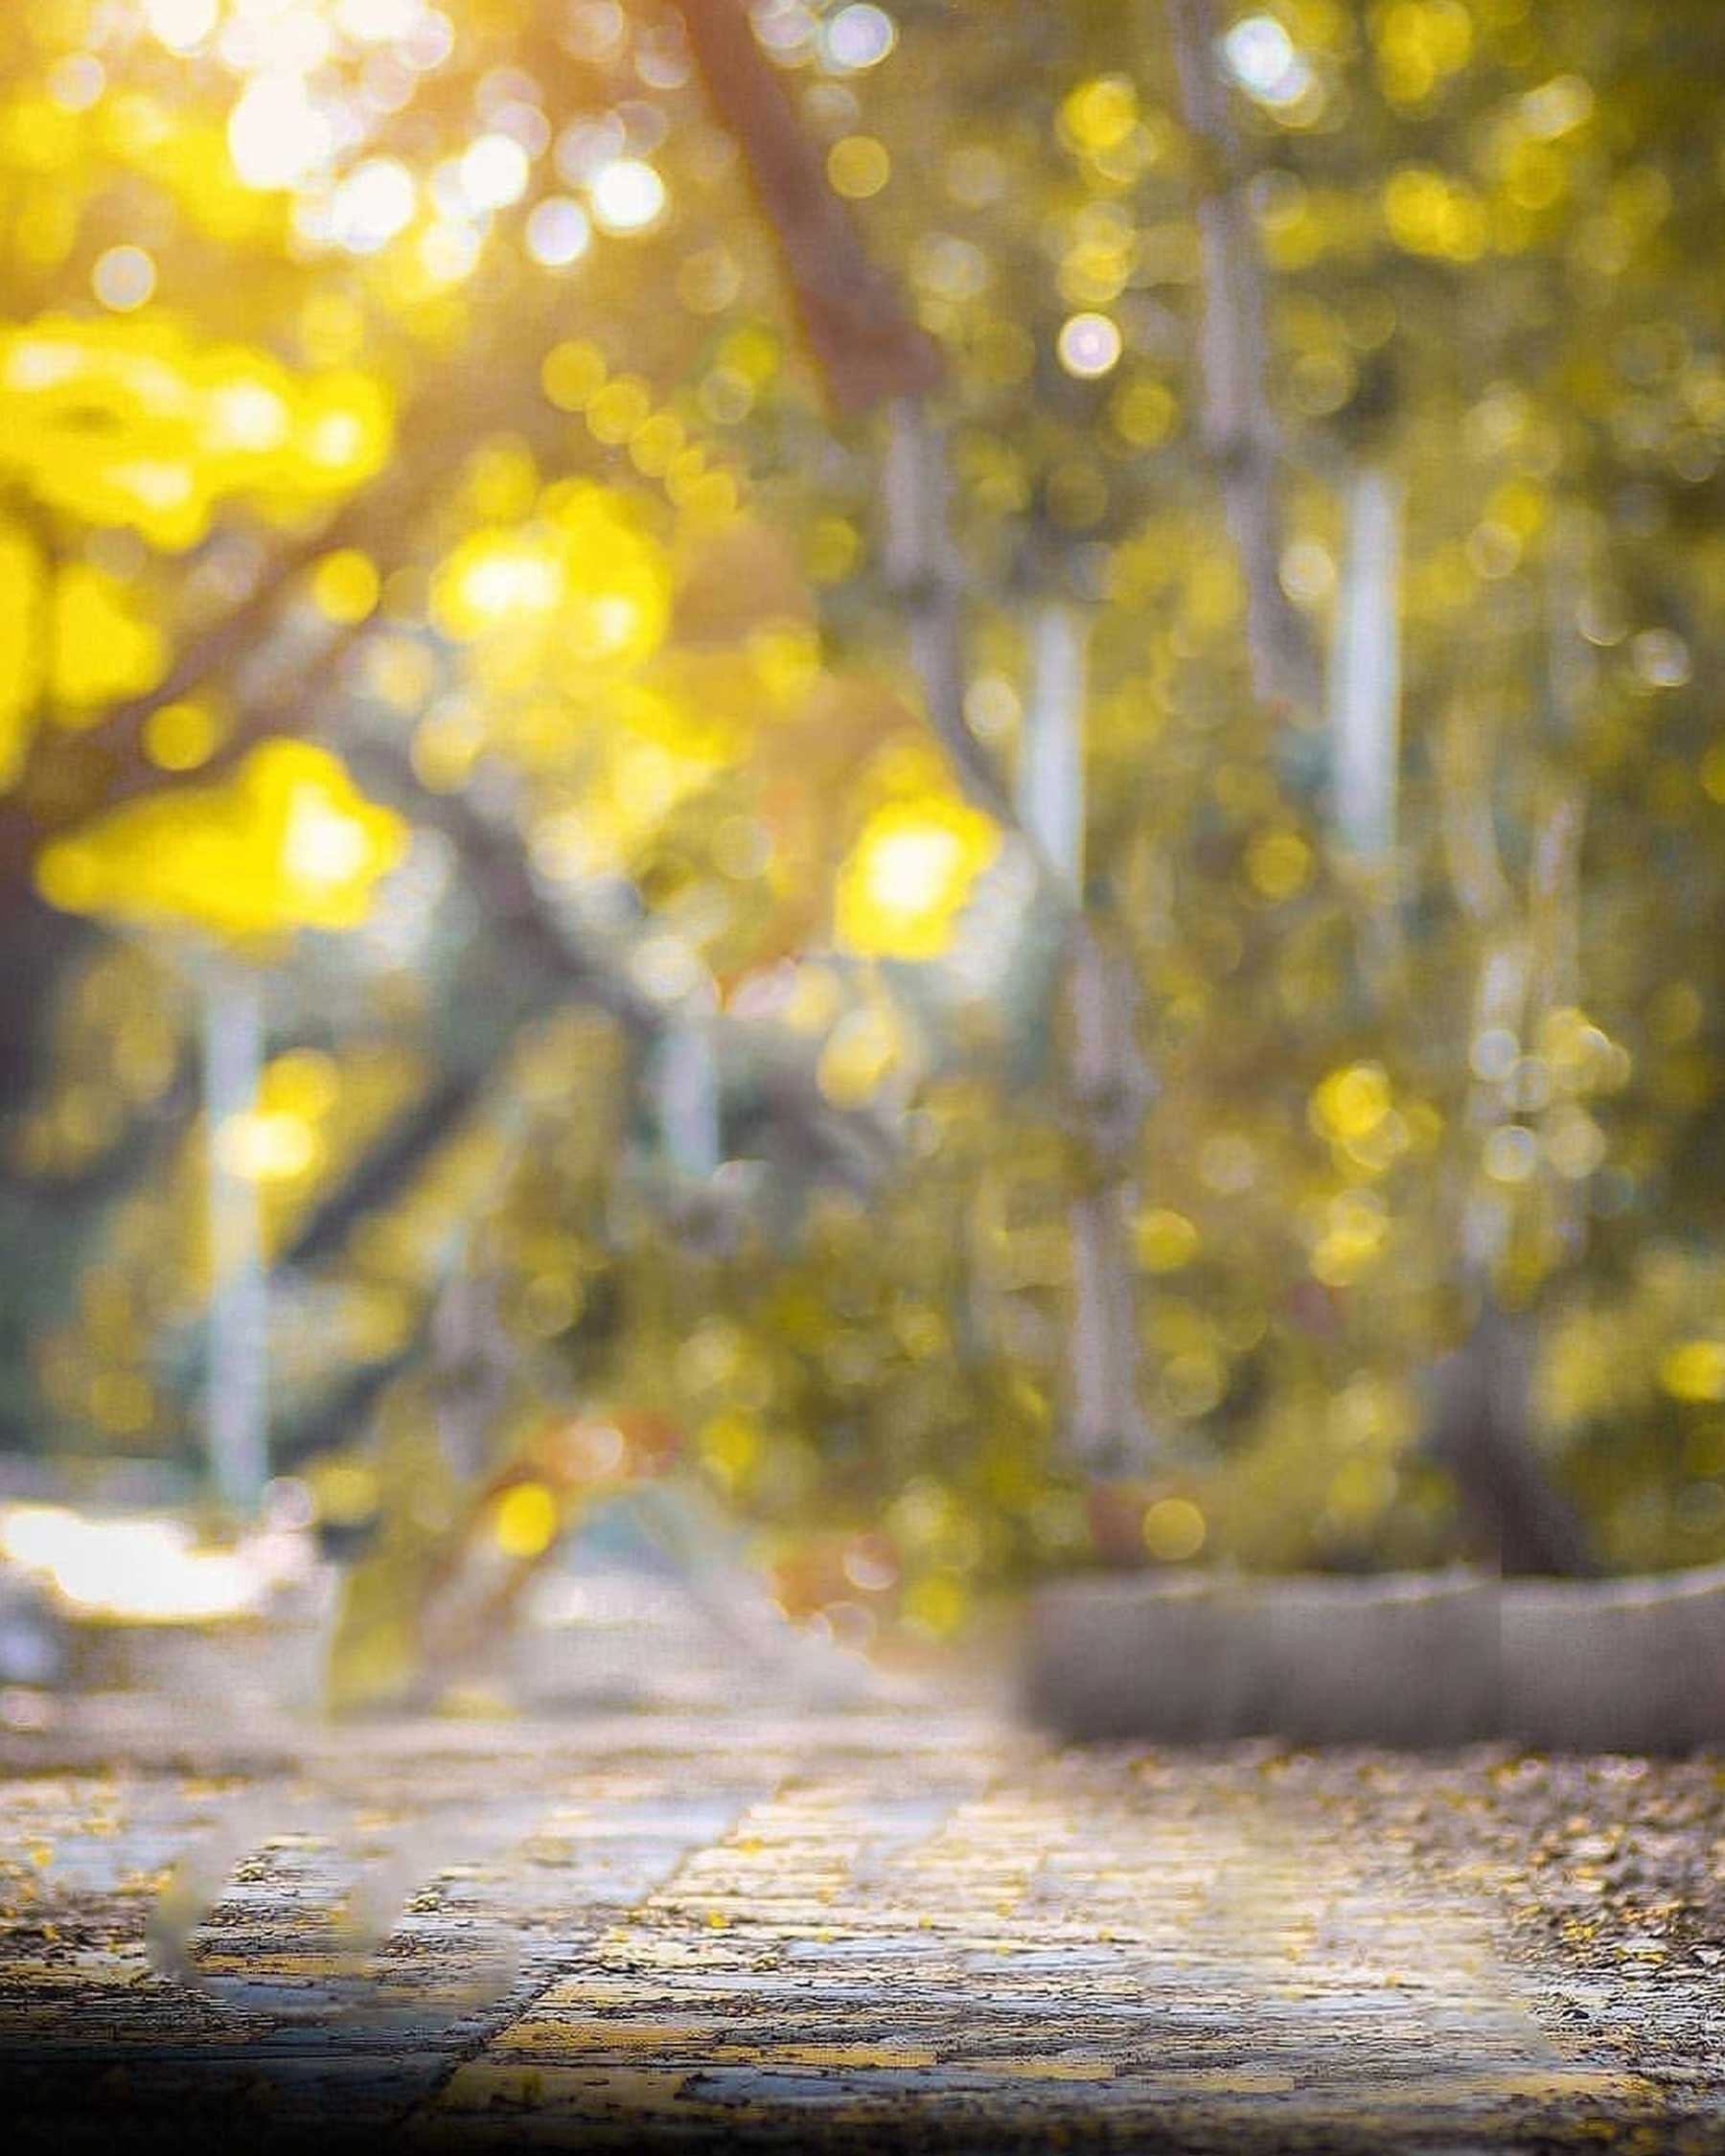 Beautiful Nature Blur PicsArt Background Free Stock Image